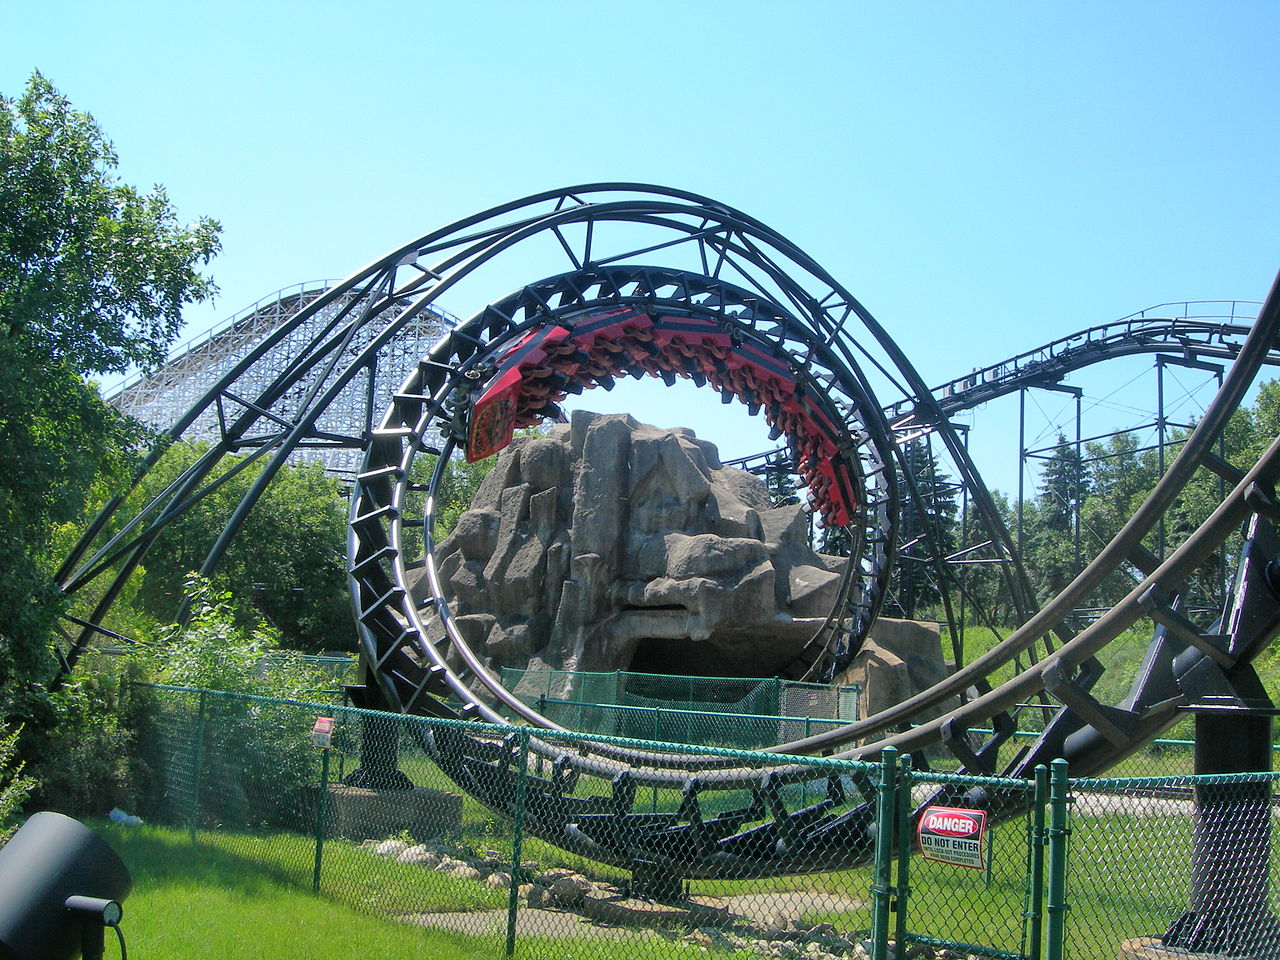 File:Demon Roller Coaster.jpg - Wikimedia Commons